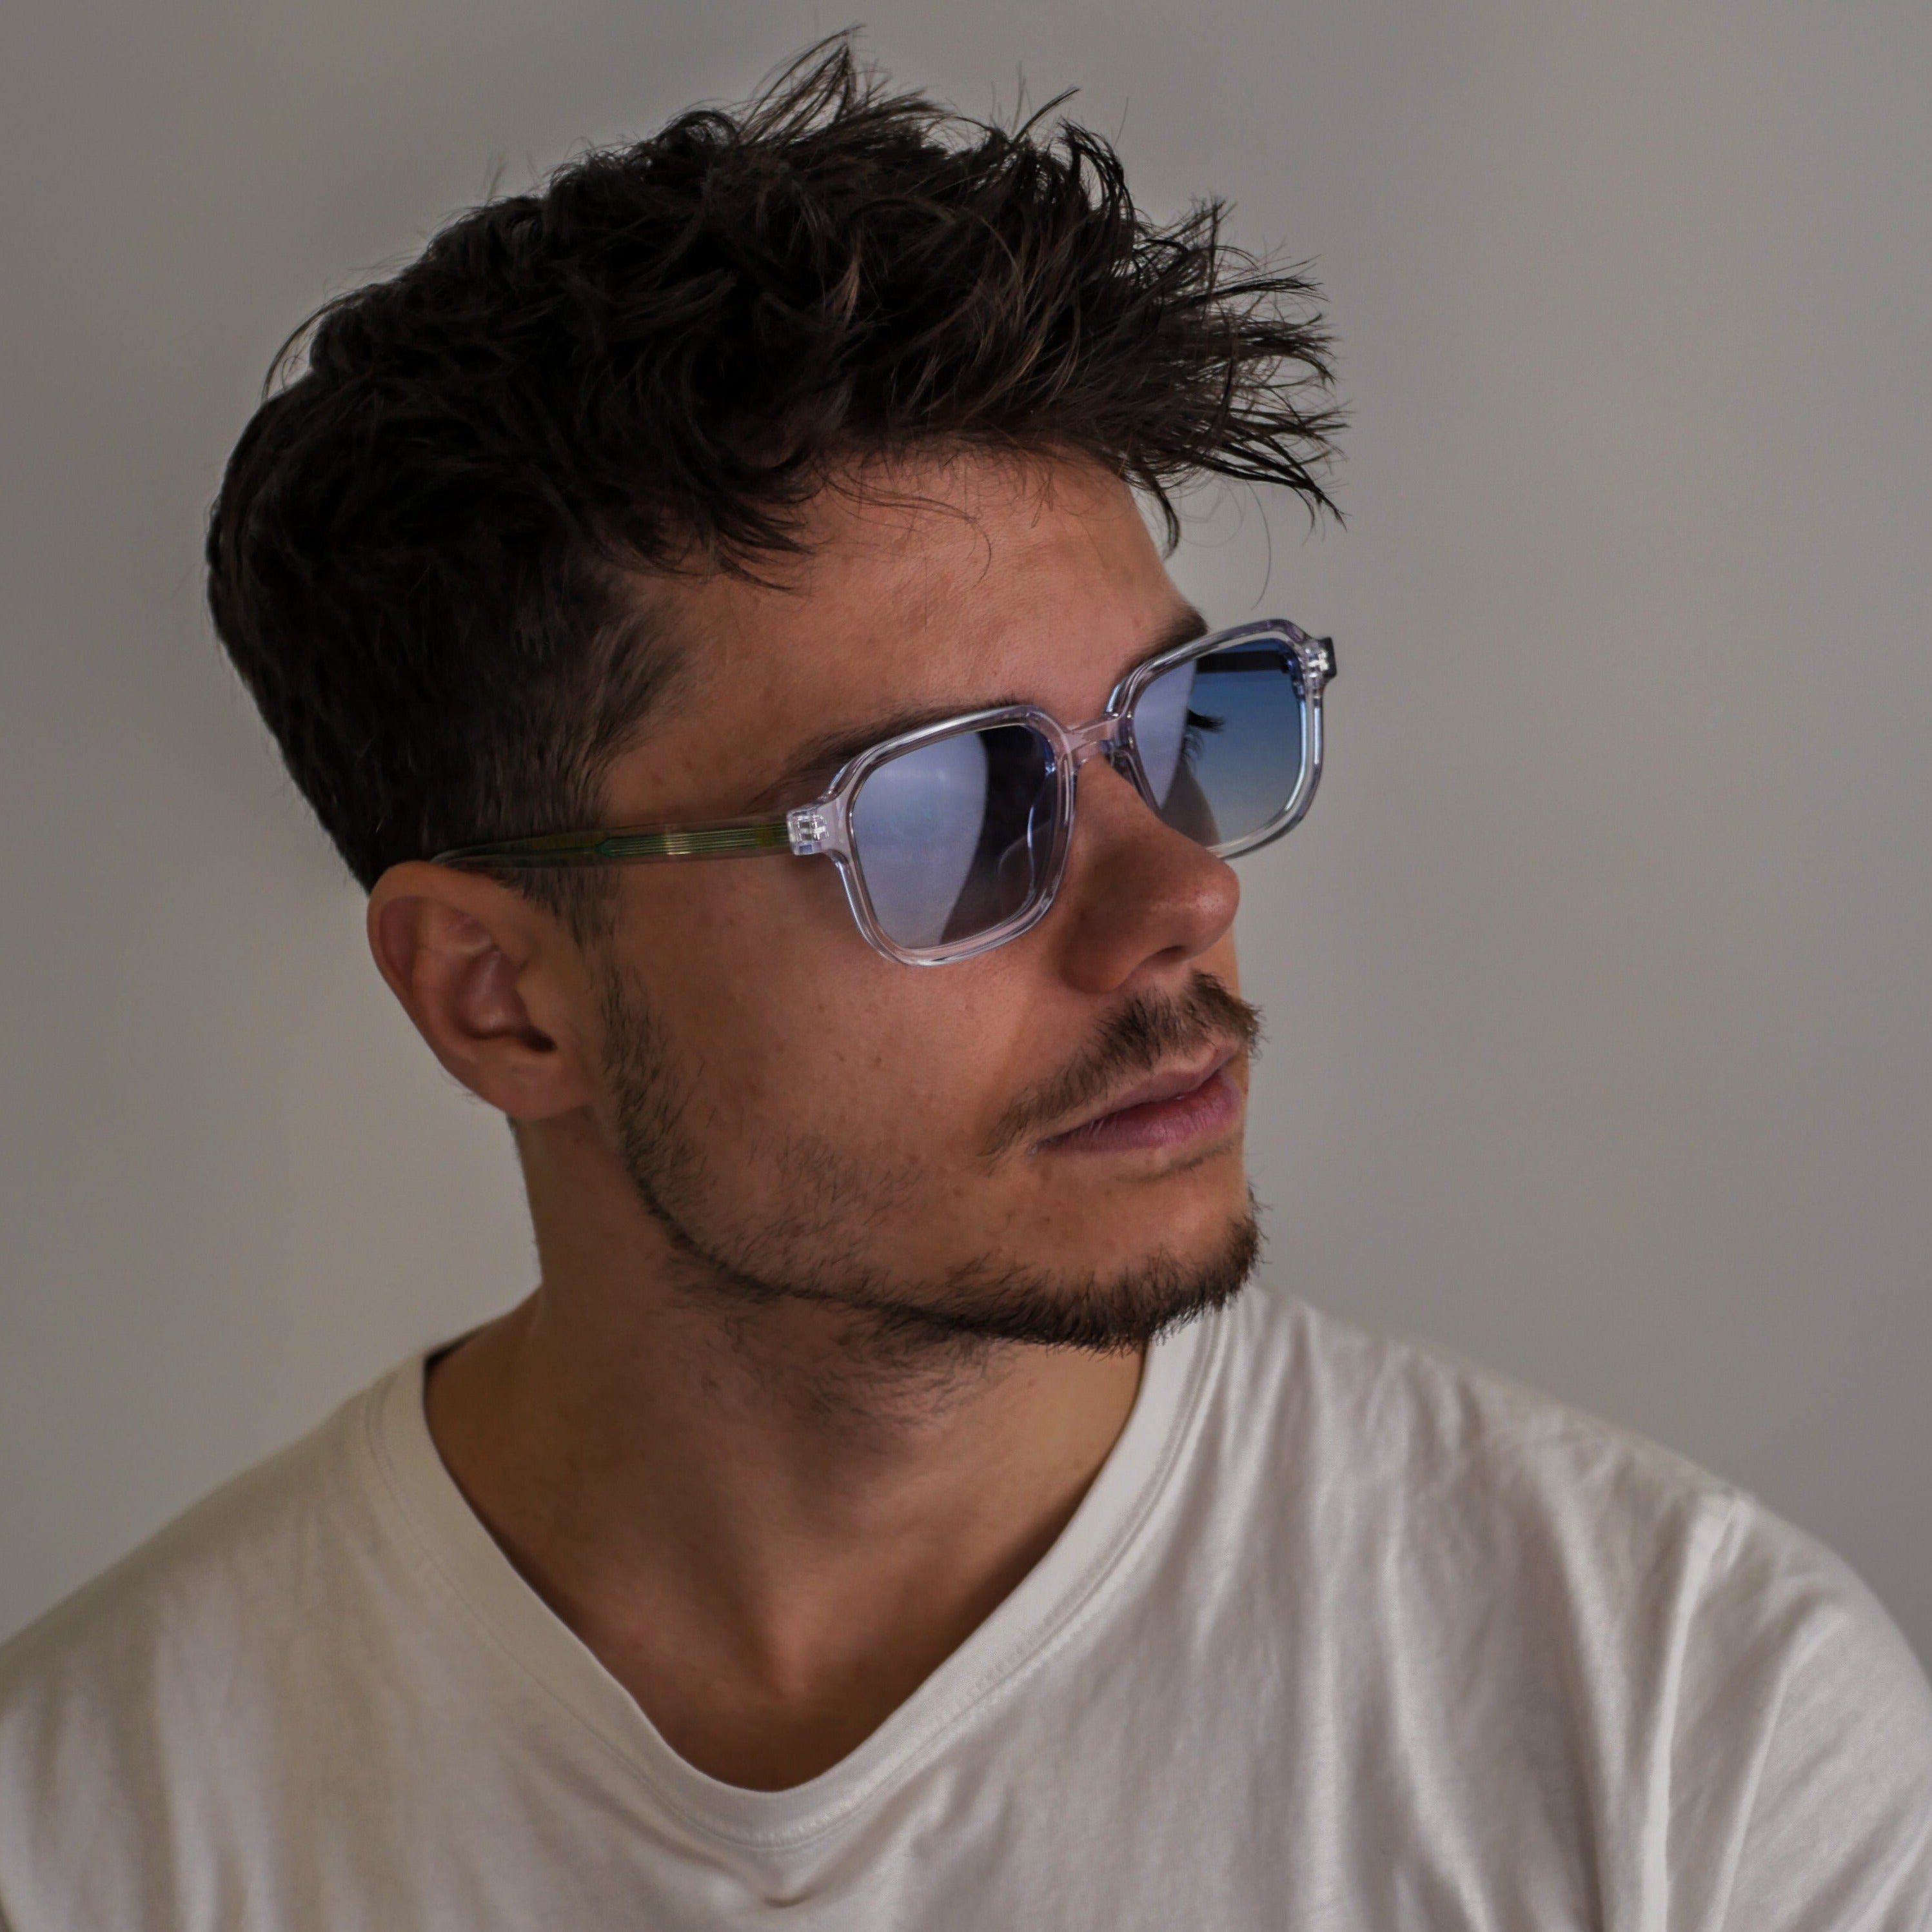 Vibrant sunglasses - Transparent grey/blue